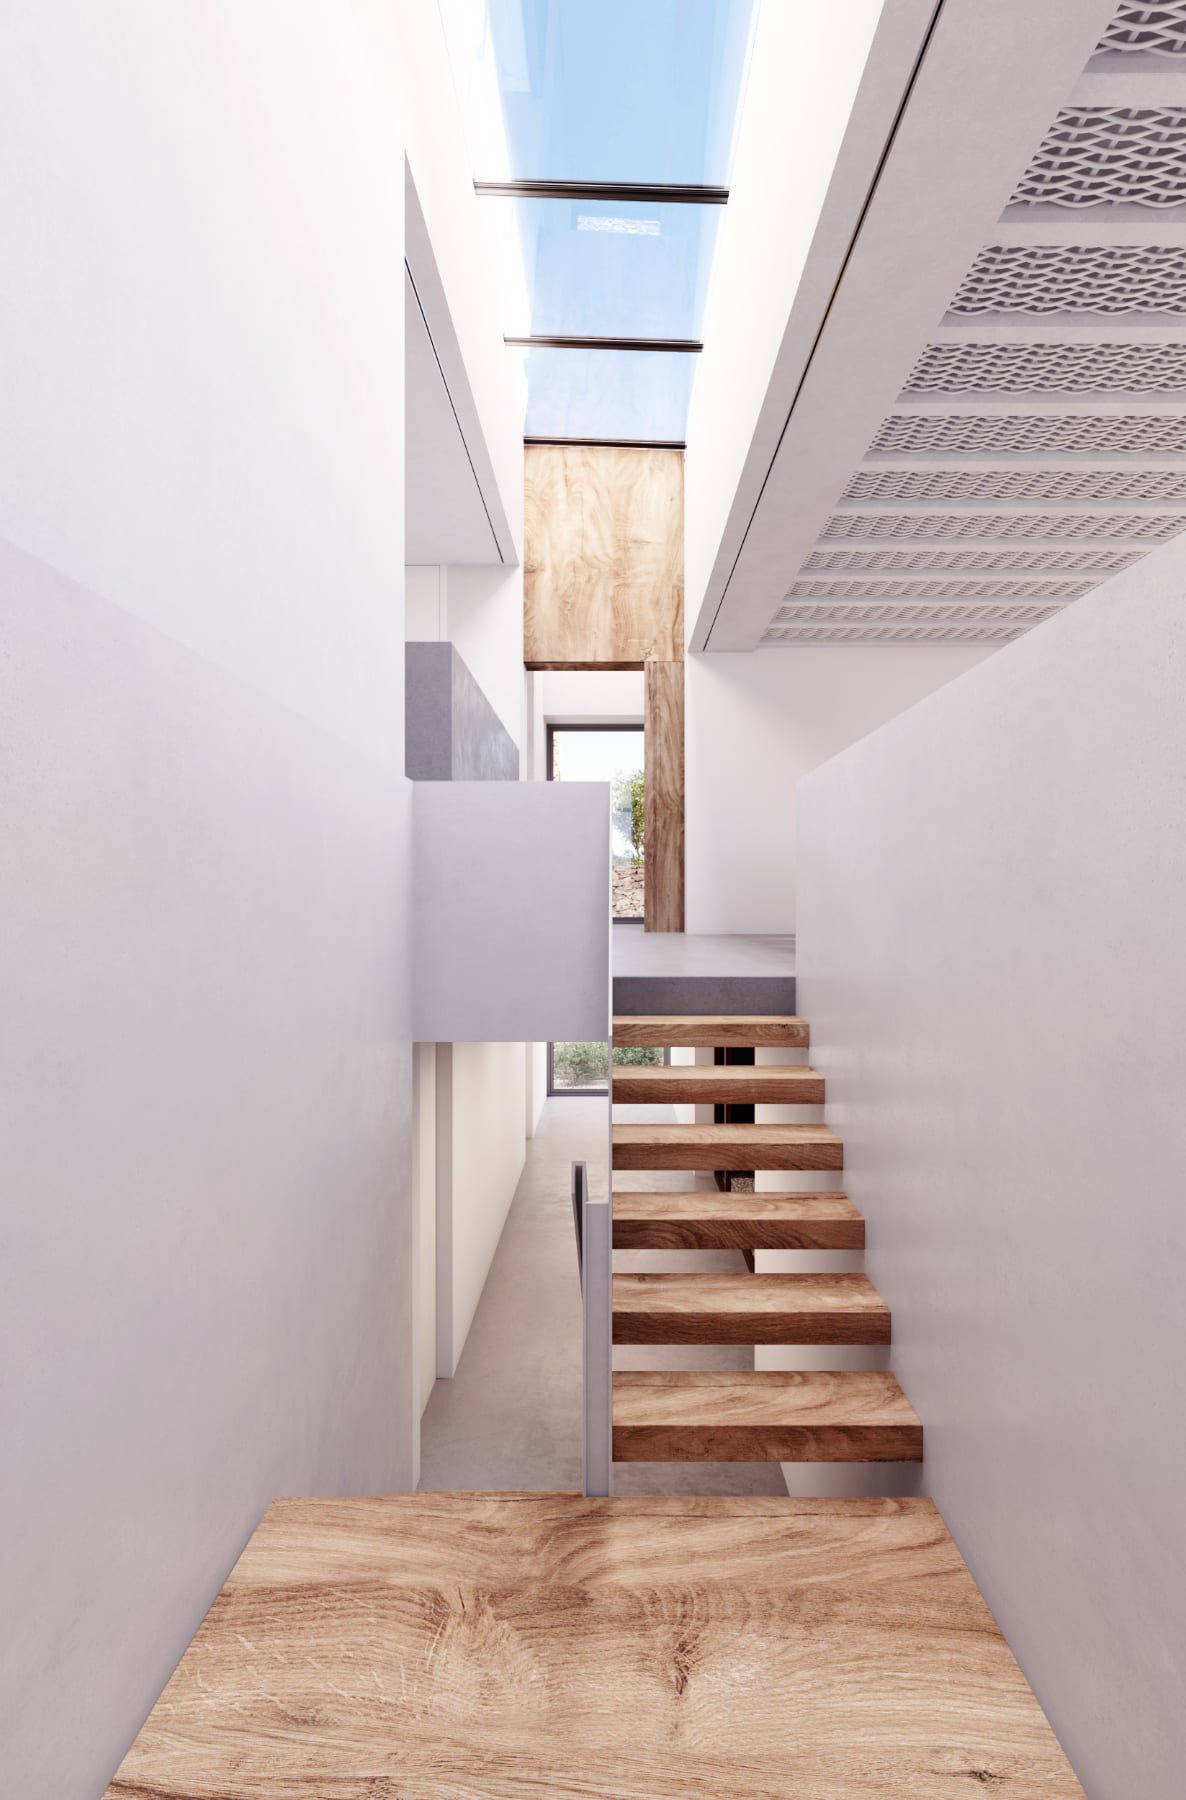 luv studio luxury architects menorca son ganxo house stair - LUV Studio - Architecture & Design - Barcelona